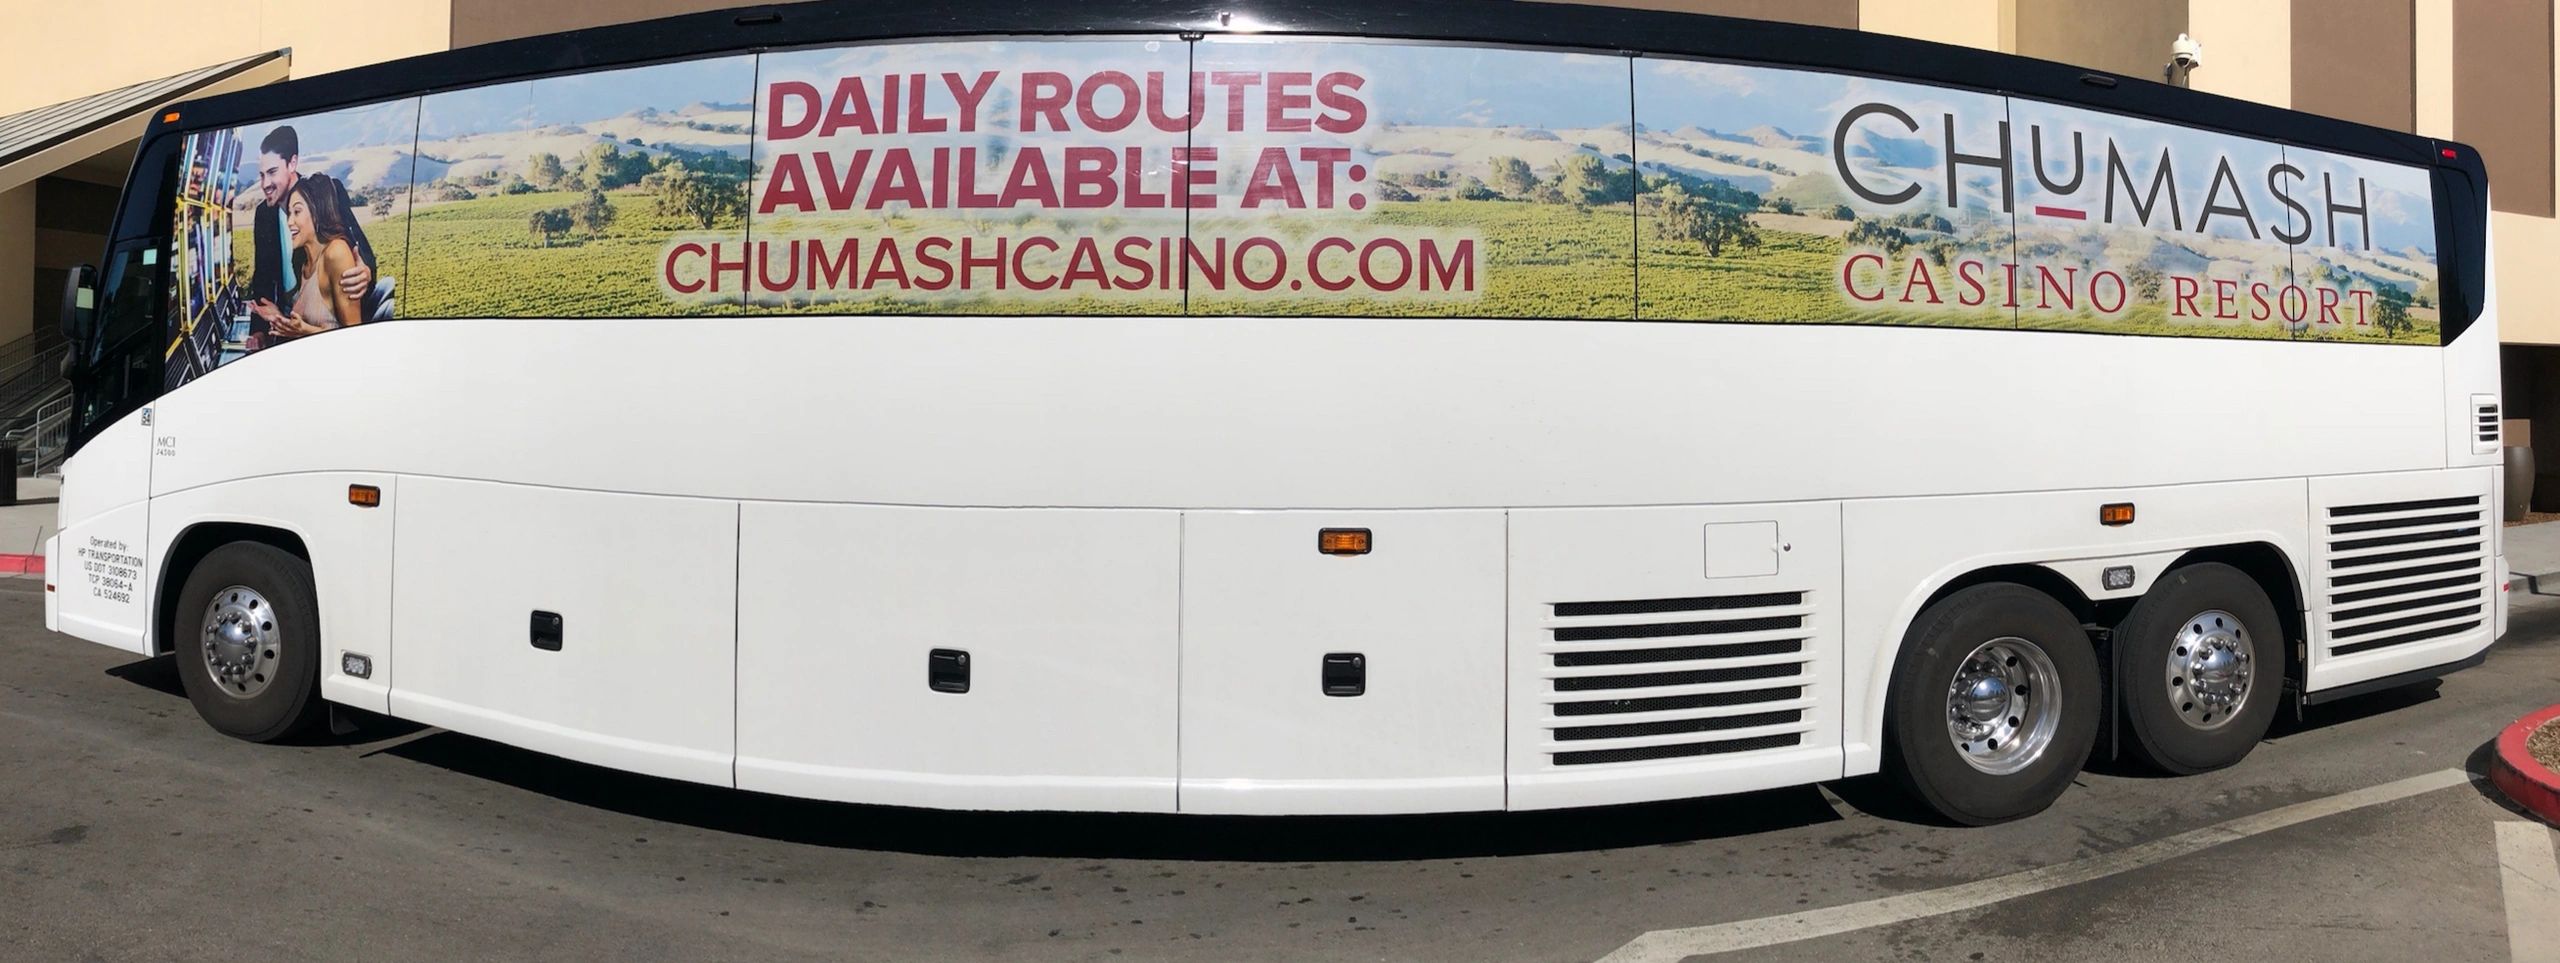 chumash casino bus schedule